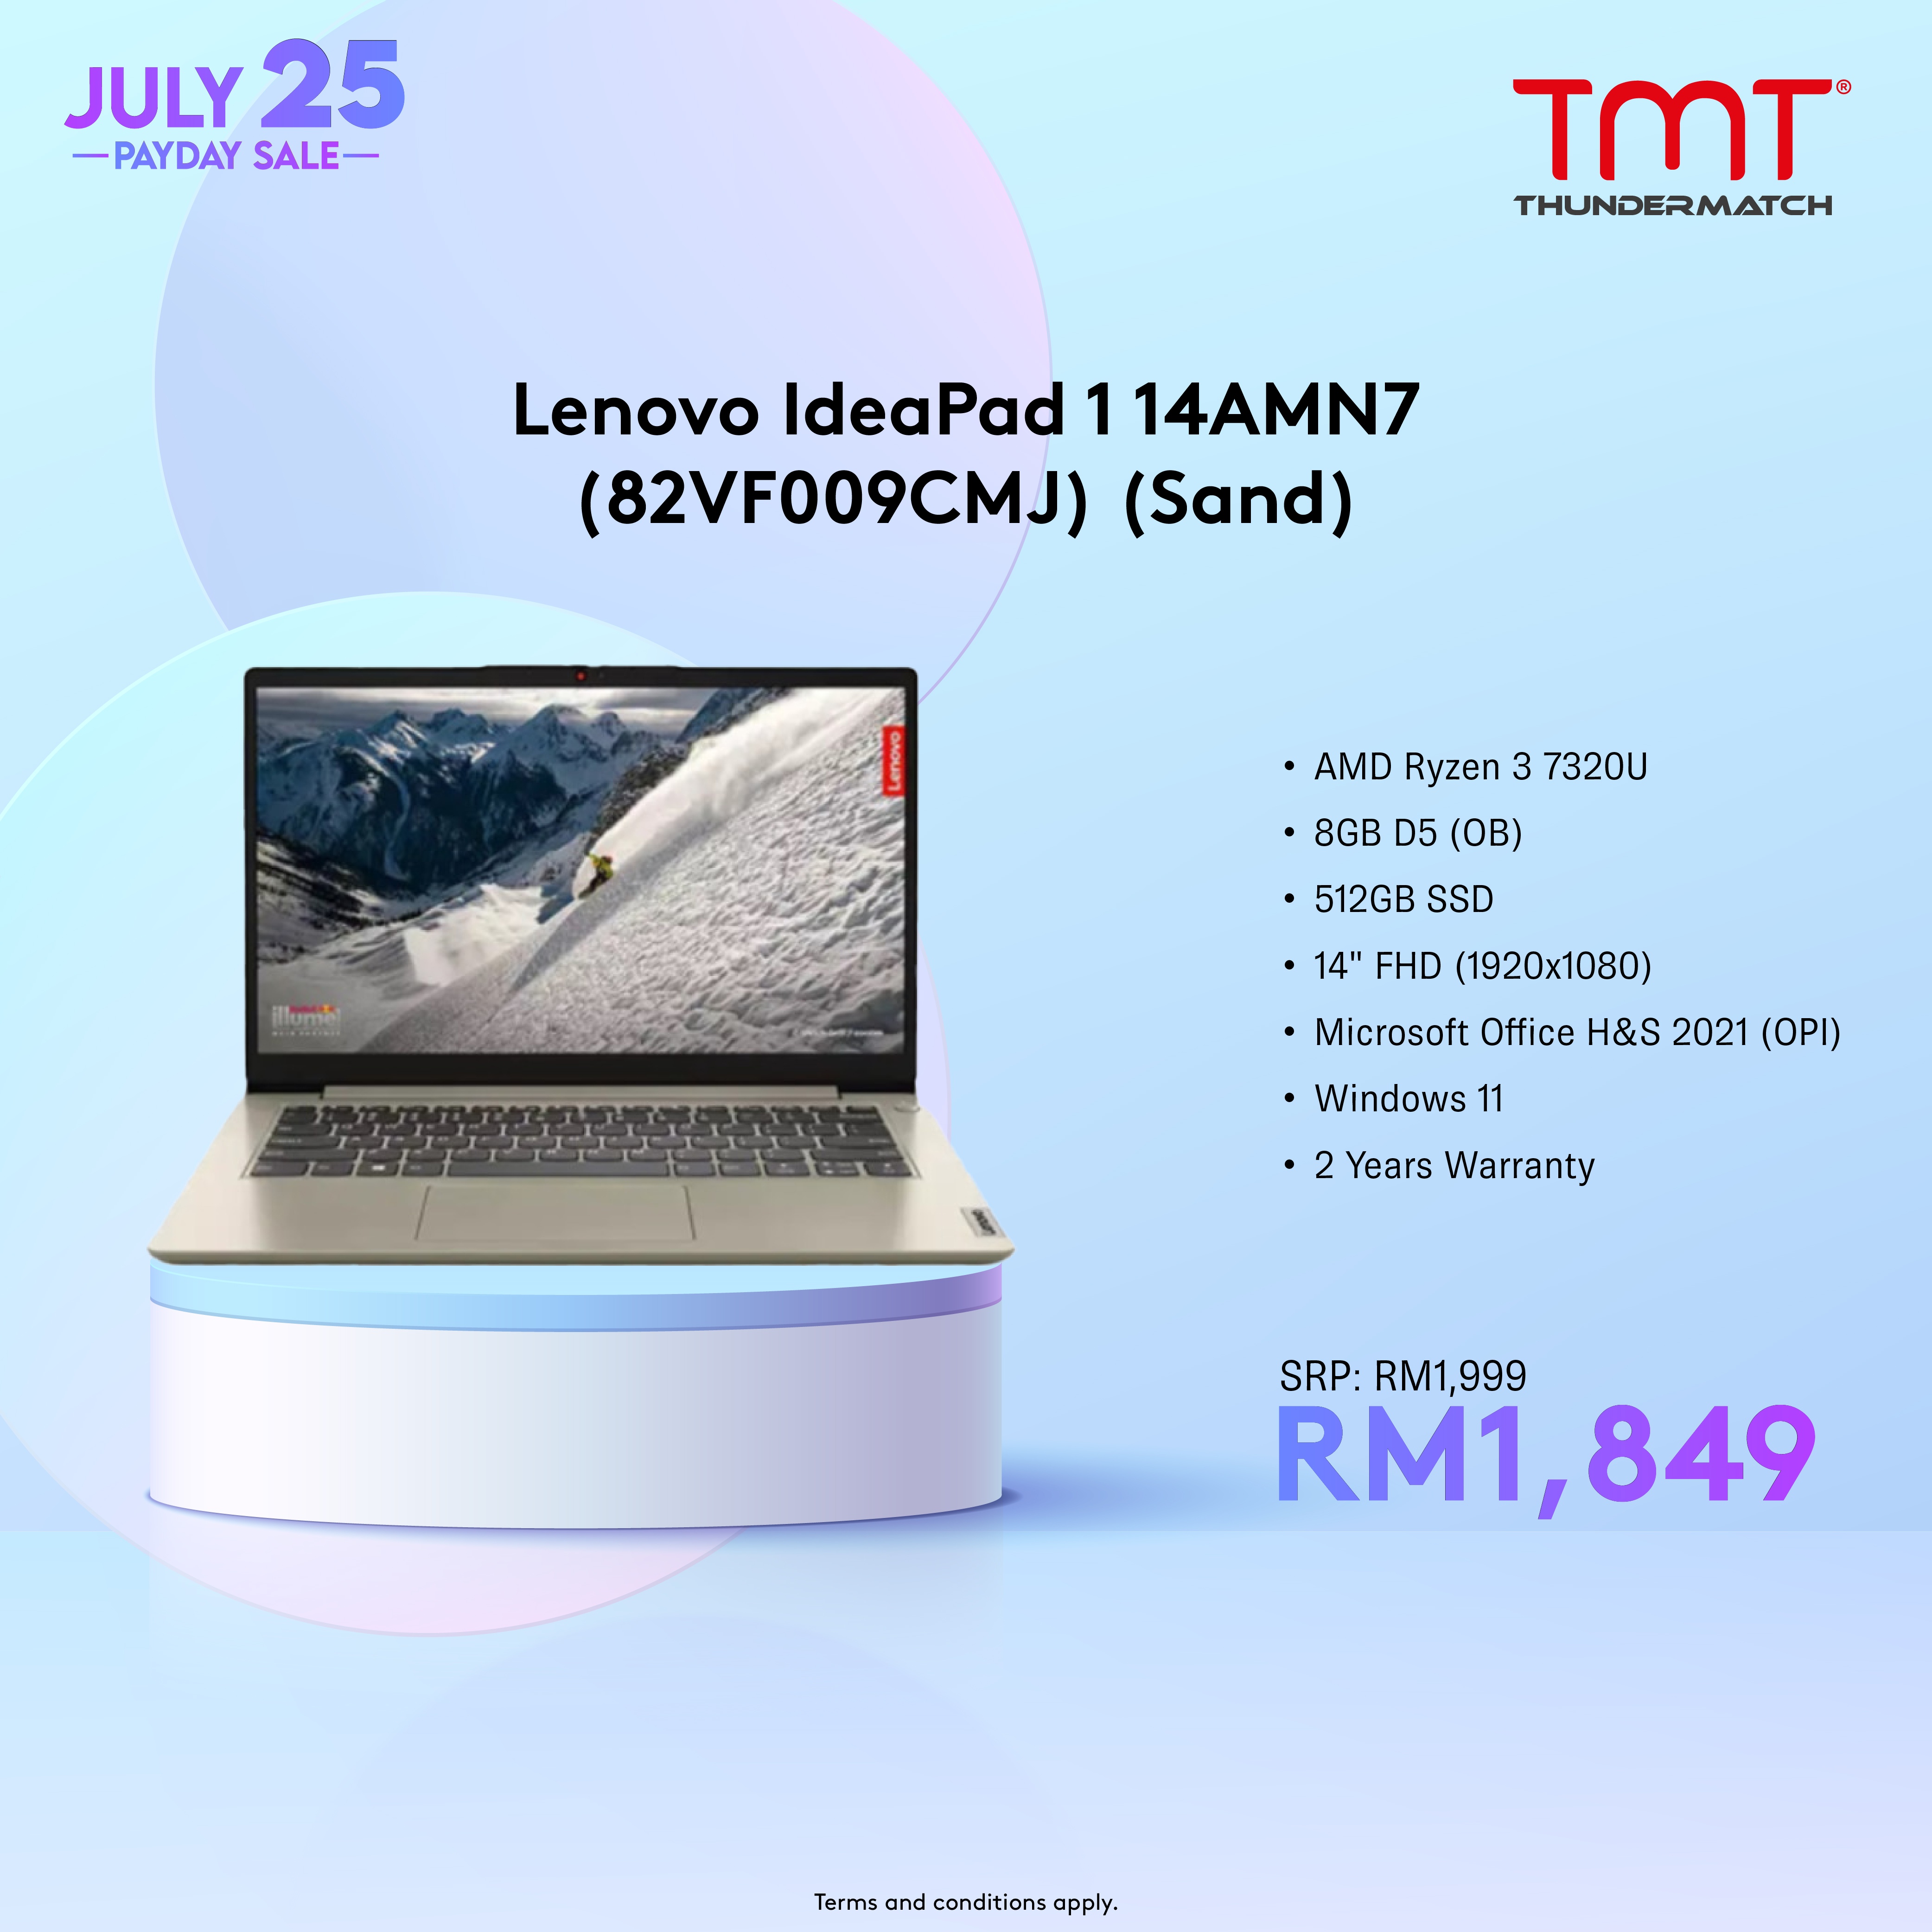 Lenovo IdeaPad 1 14AMN7 (82VF0099MJ/82VF009CMJ) Laptop | AMD Ryzen 3 7320U | 8GB RAM 512GB SSD | 14" FHD(1920x1080) | MS Office H&S 2021 | Win11 | 2Y Warranty